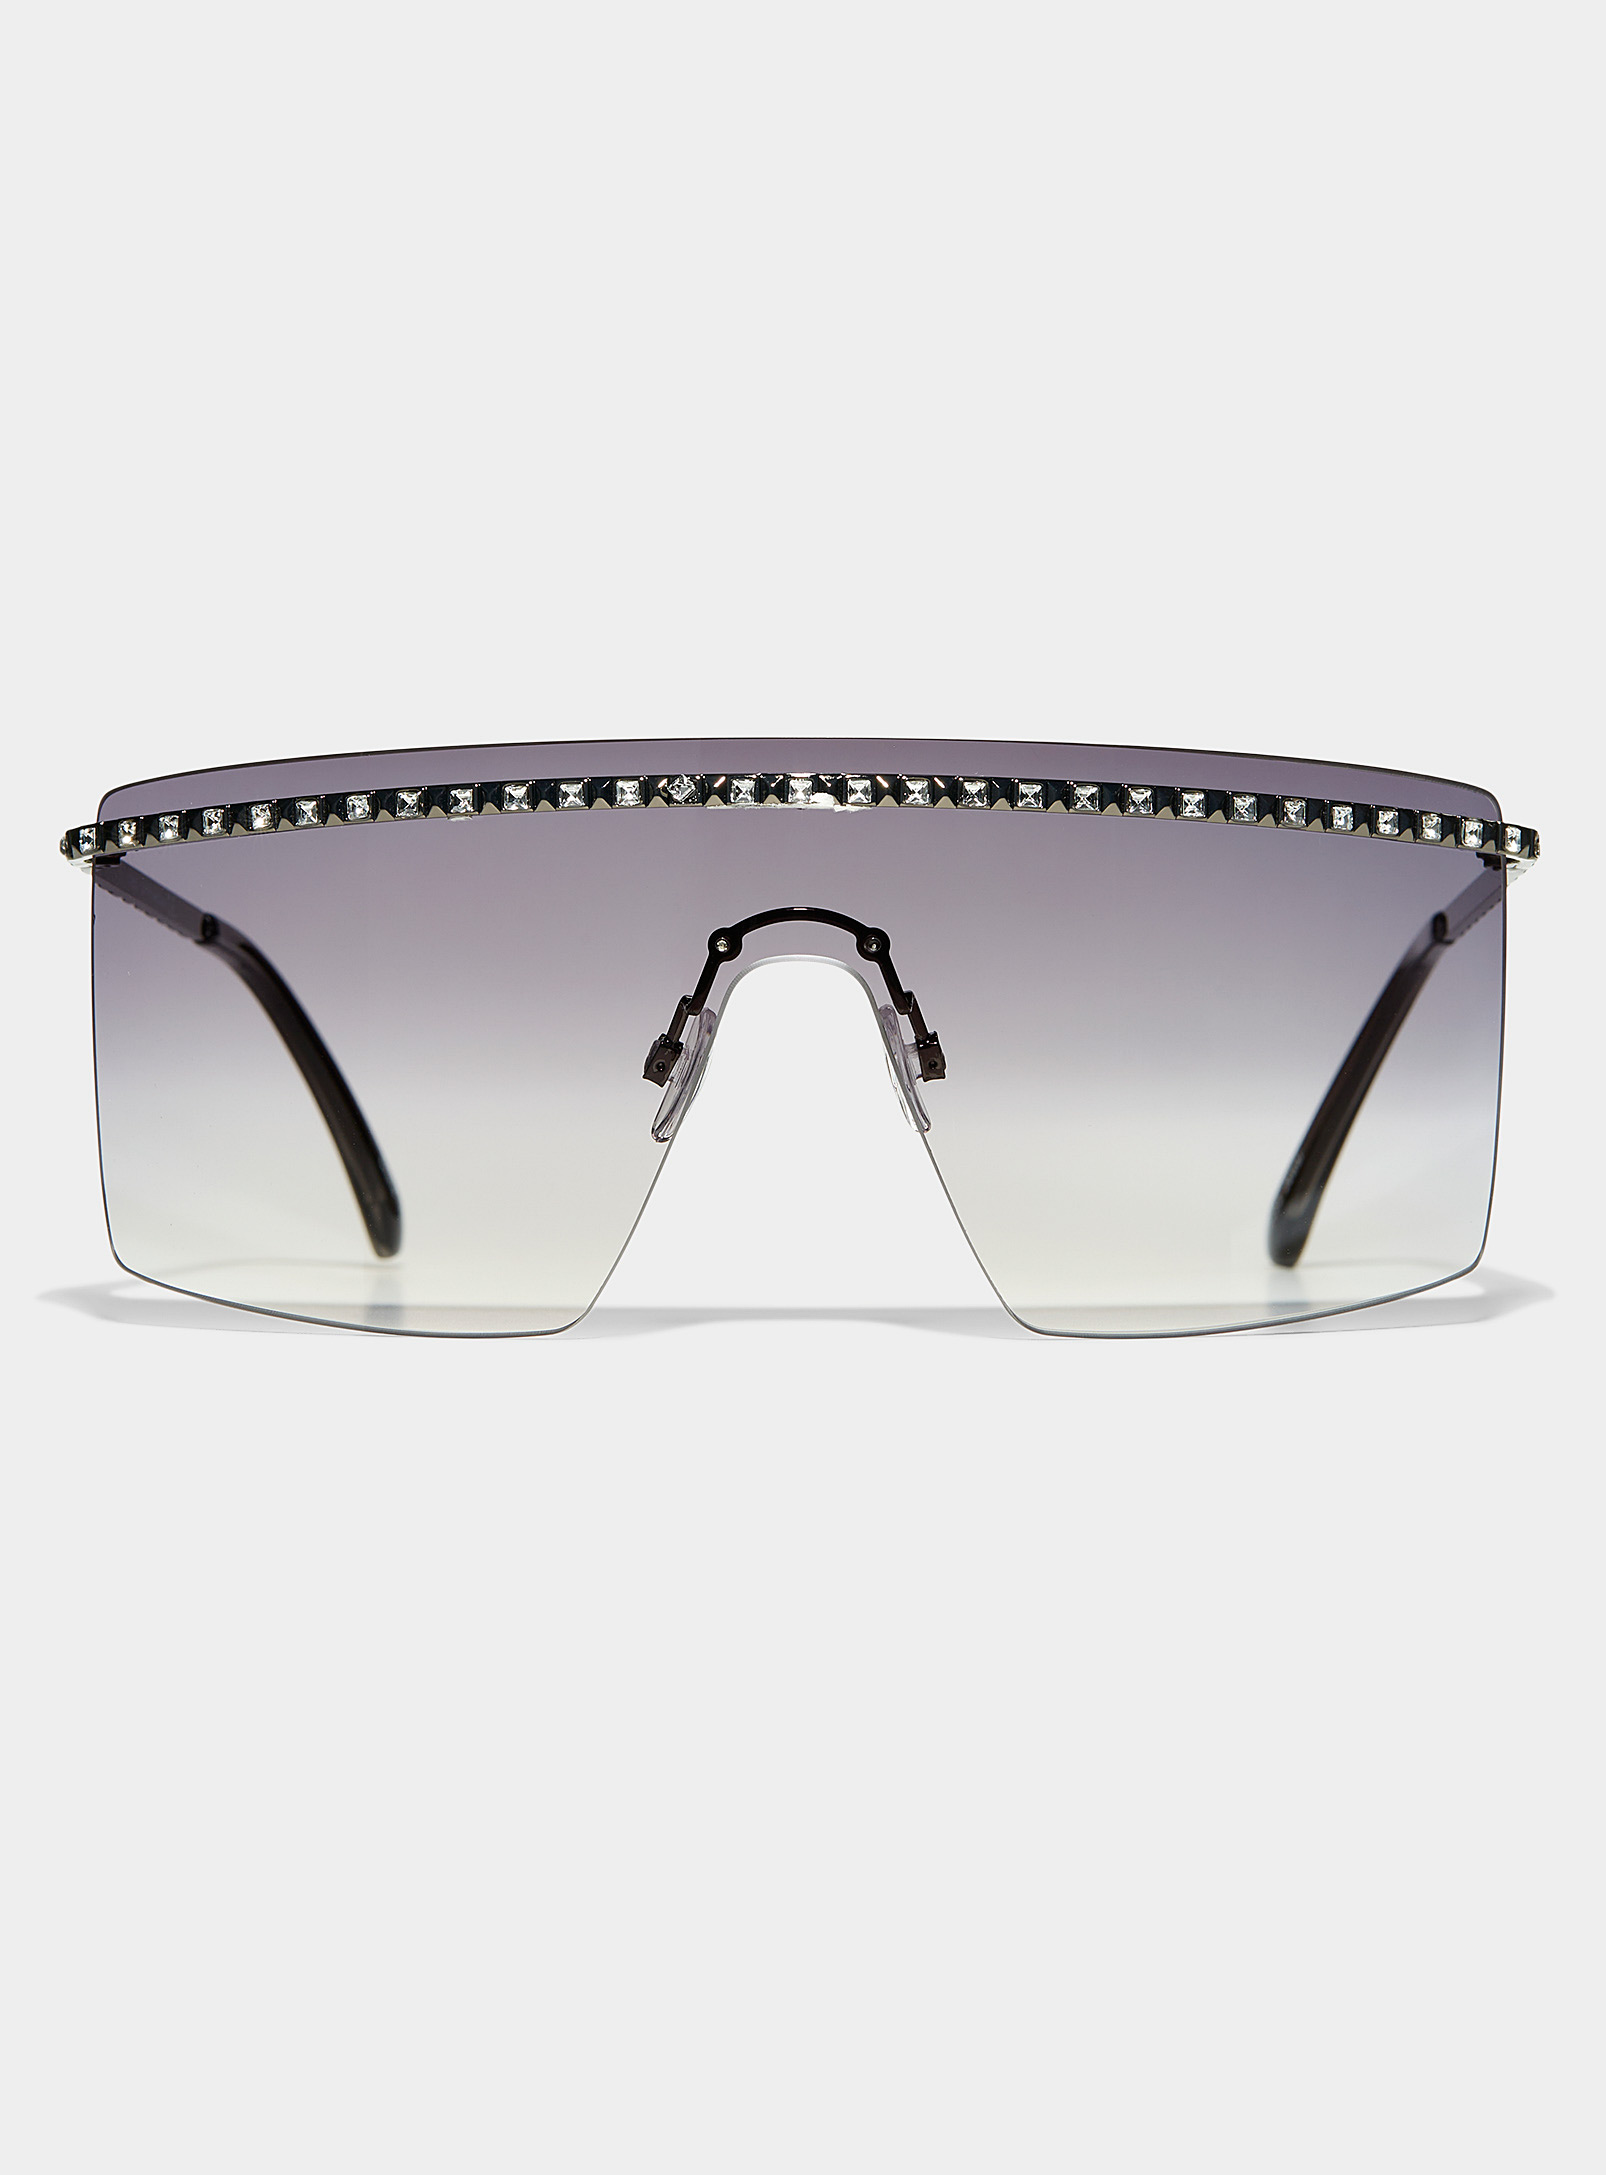 Simons - Women's Jewl visor sunglasses